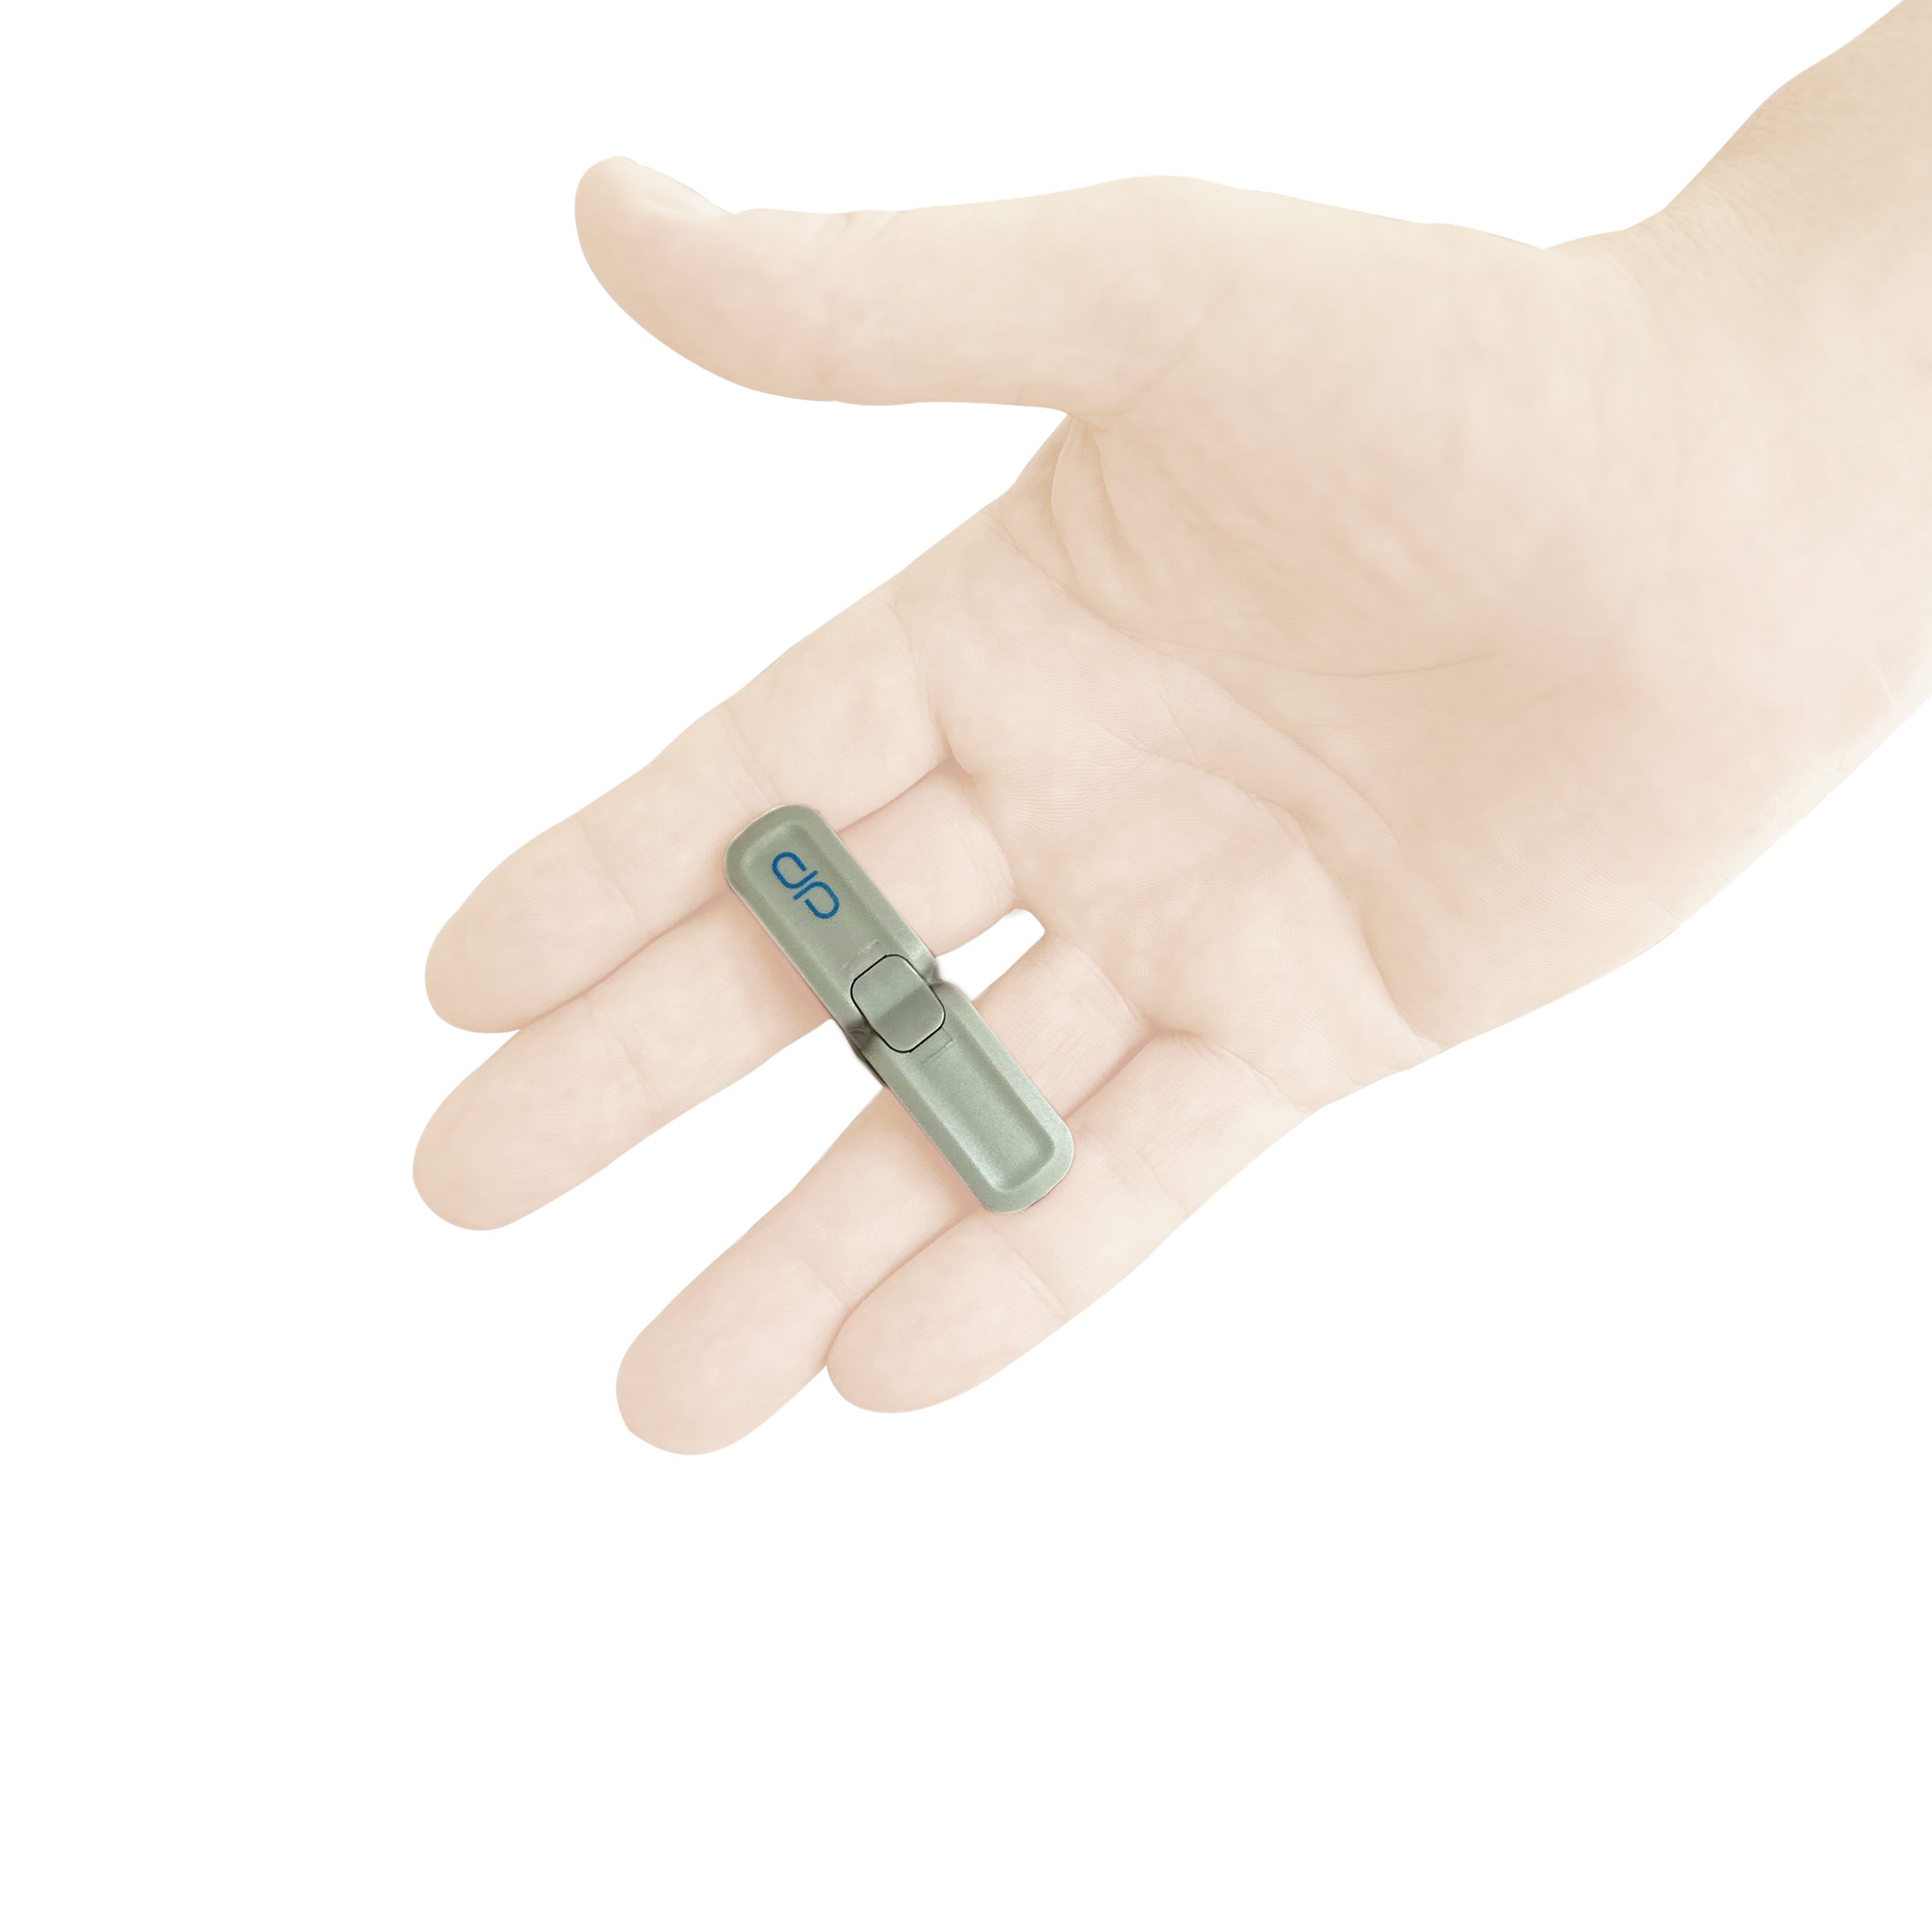 2 finger pull cord handle | diamondgrip™